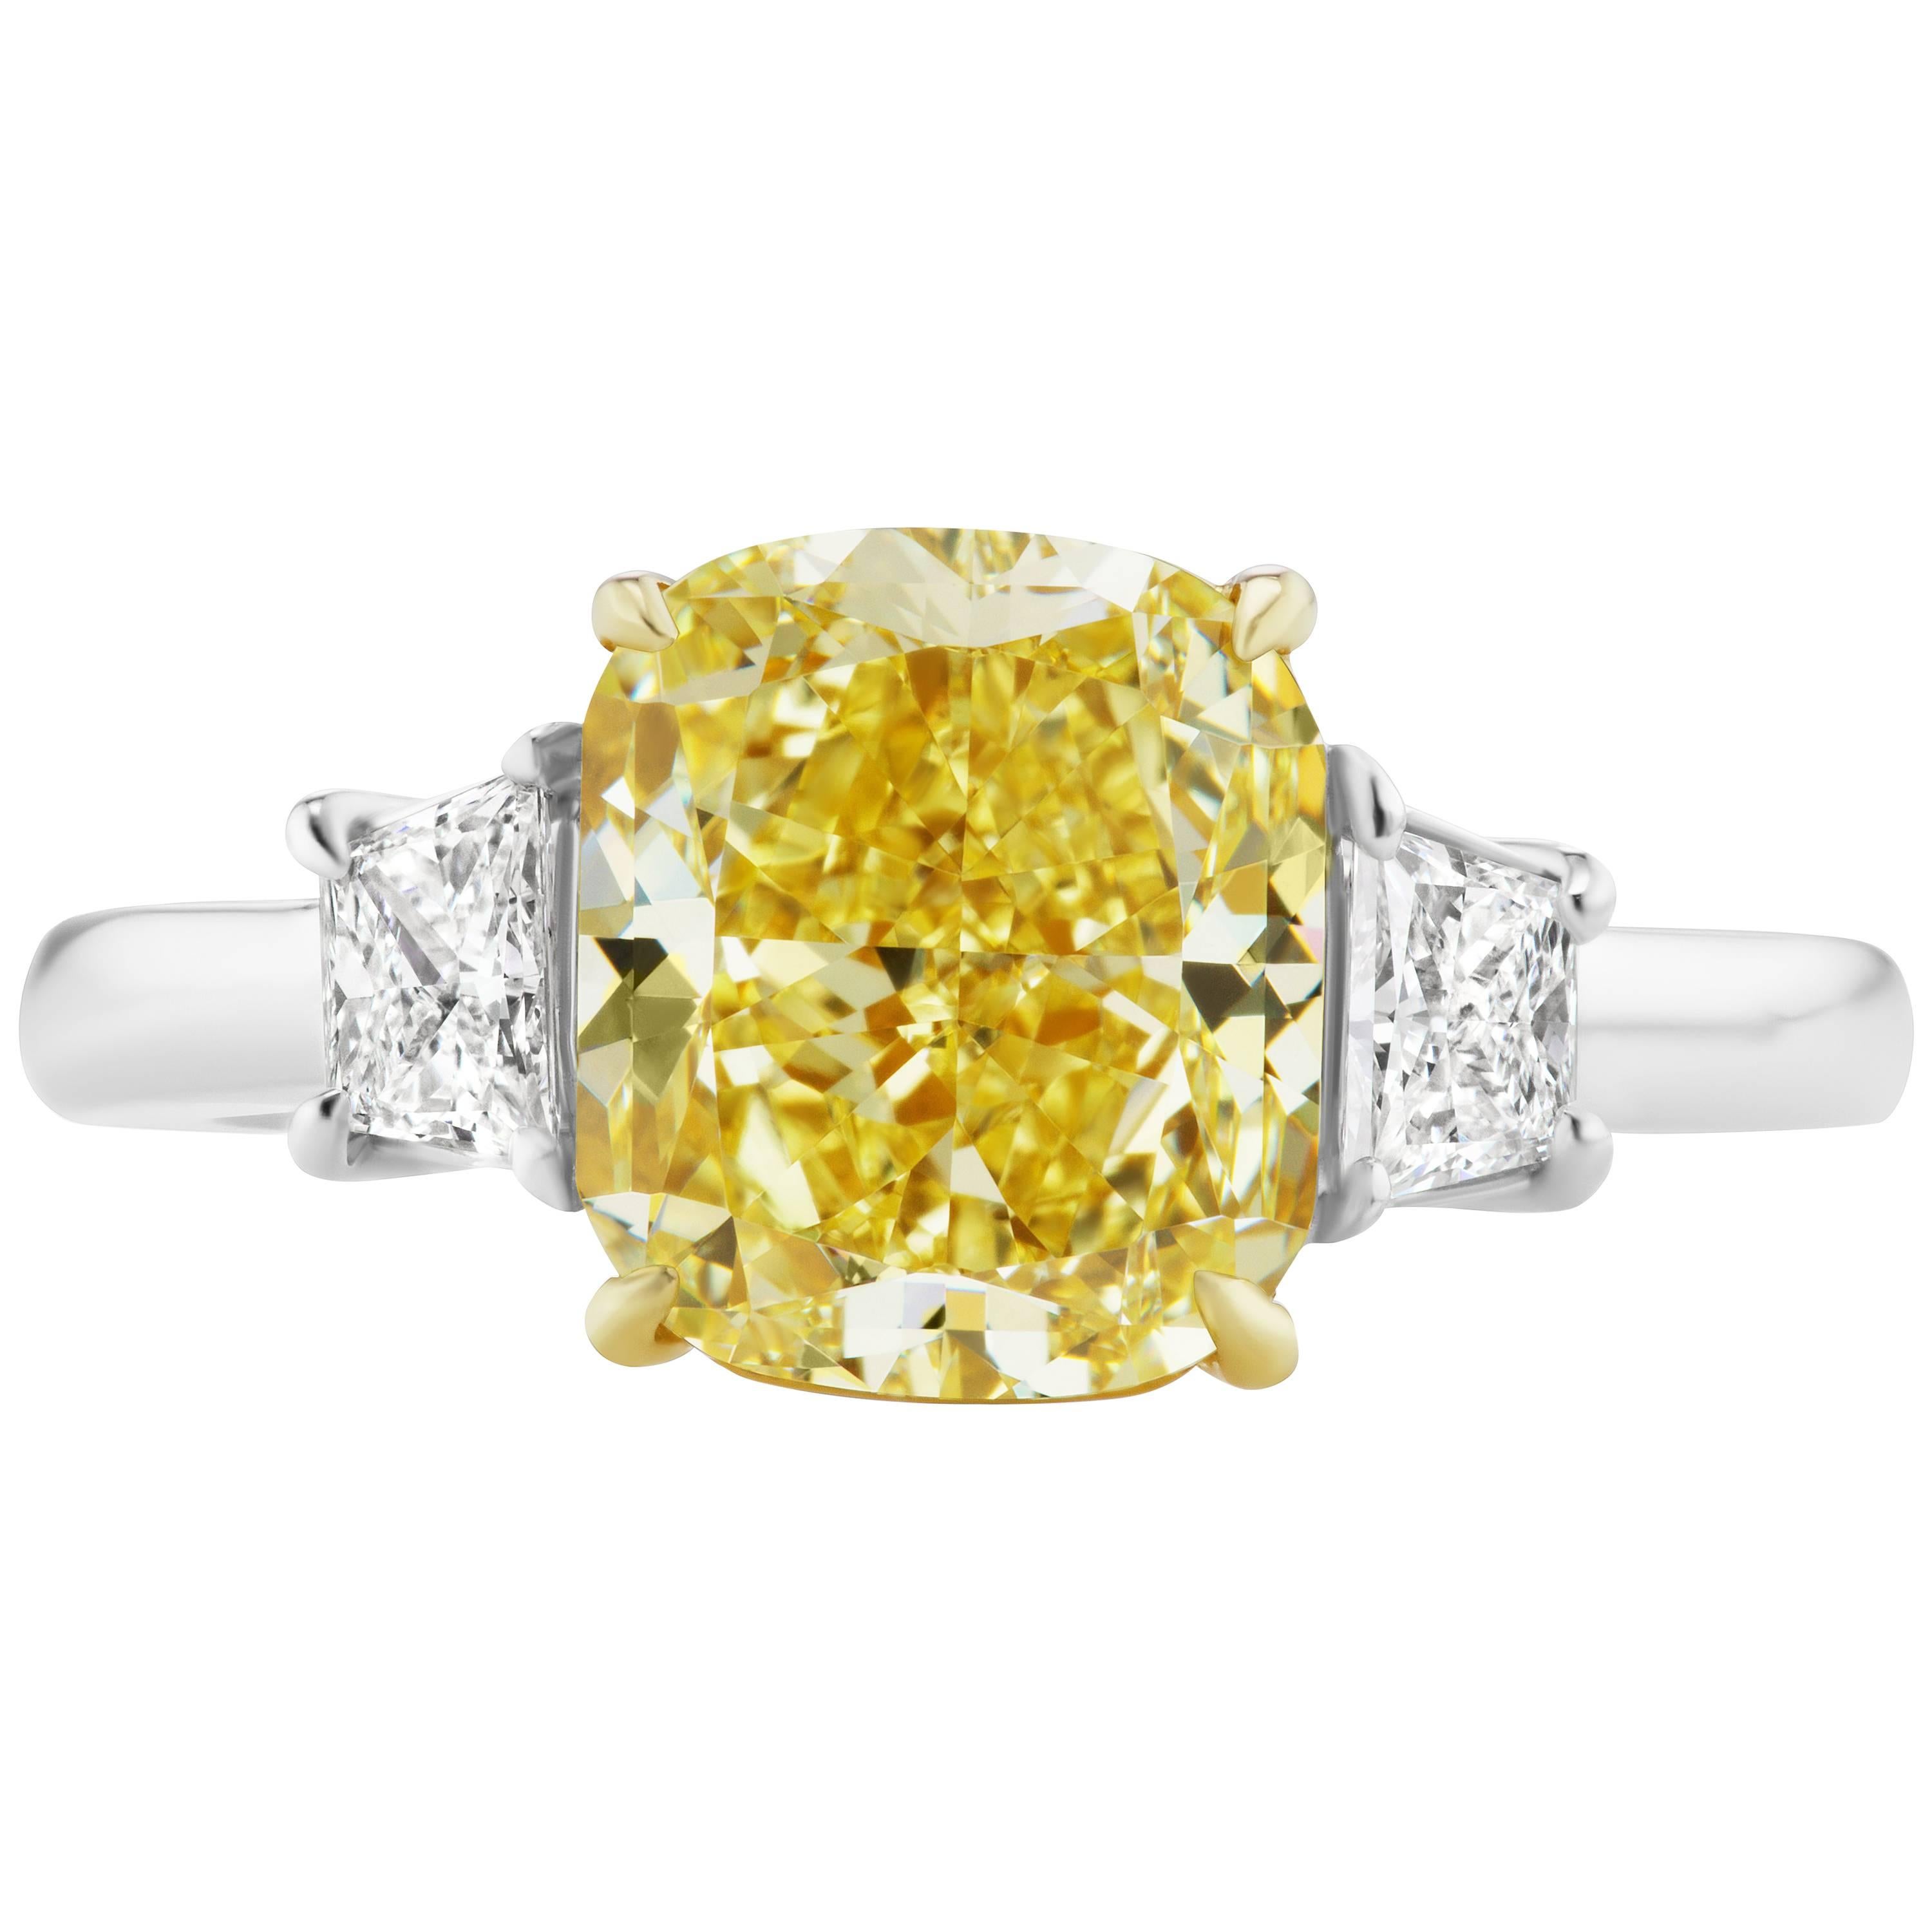 Scarselli 3.80 carat Fancy Intense Yellow Cushion Cut Diamond Engagement Ring 